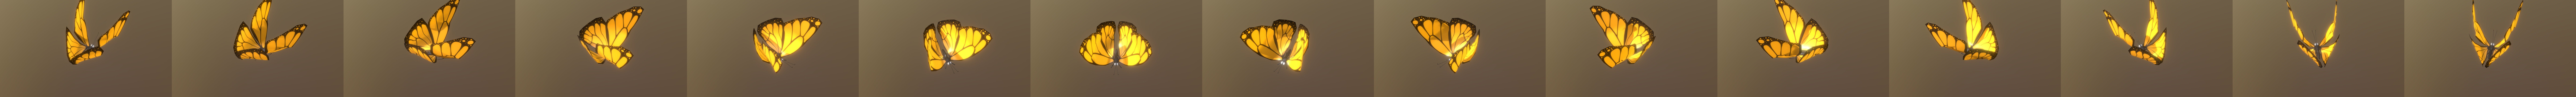 Butterfly 3D models - Sketchfab